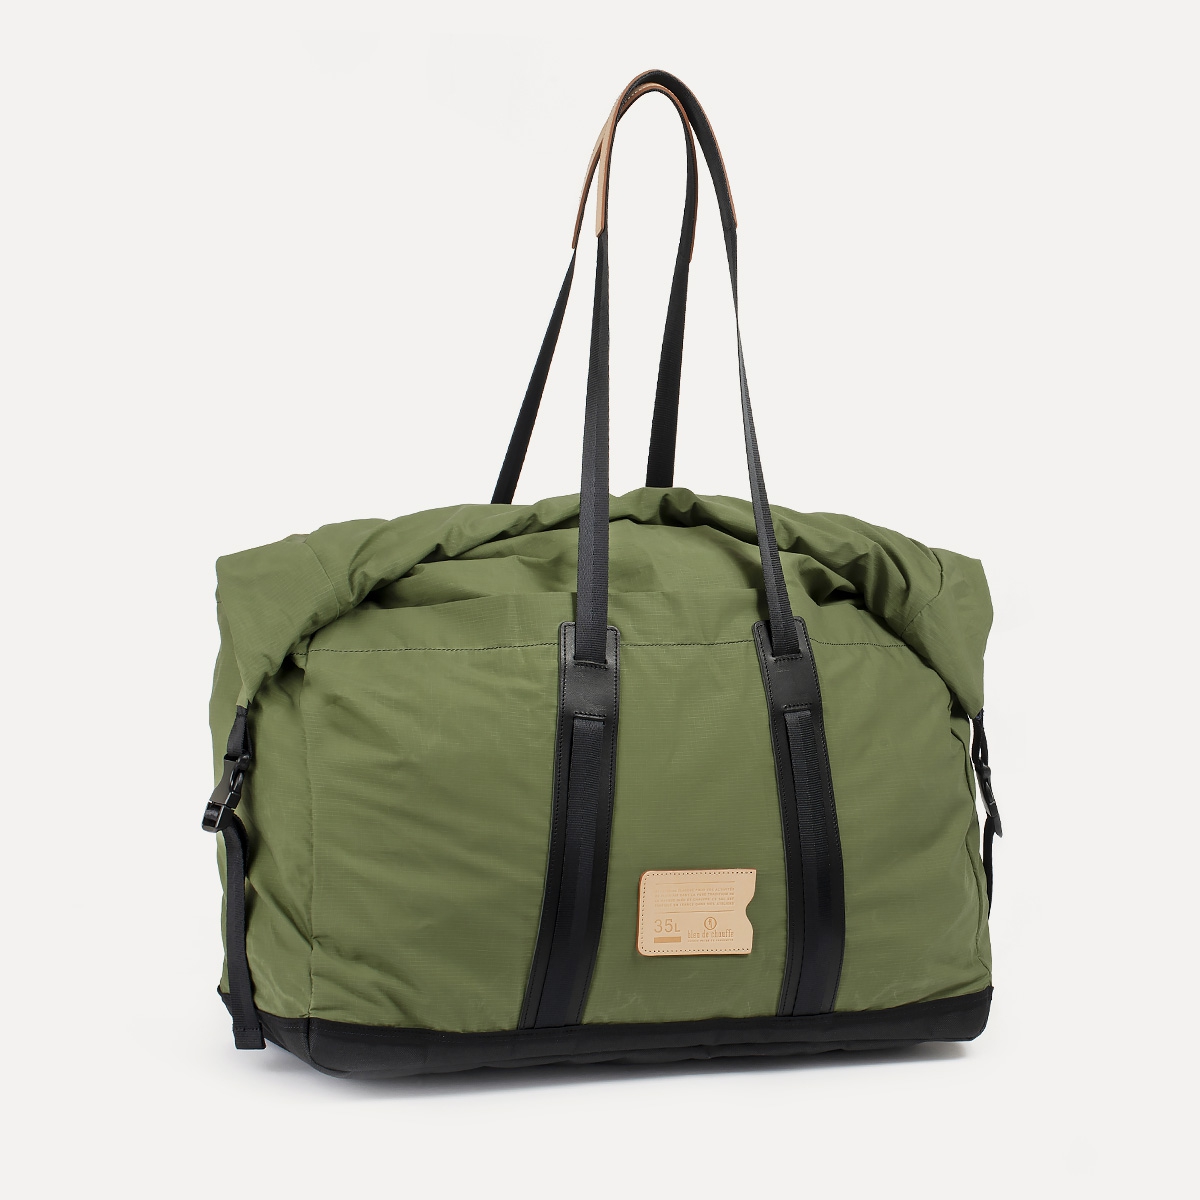 35L Baroud Travel bag - Bancha Green (image n°2)